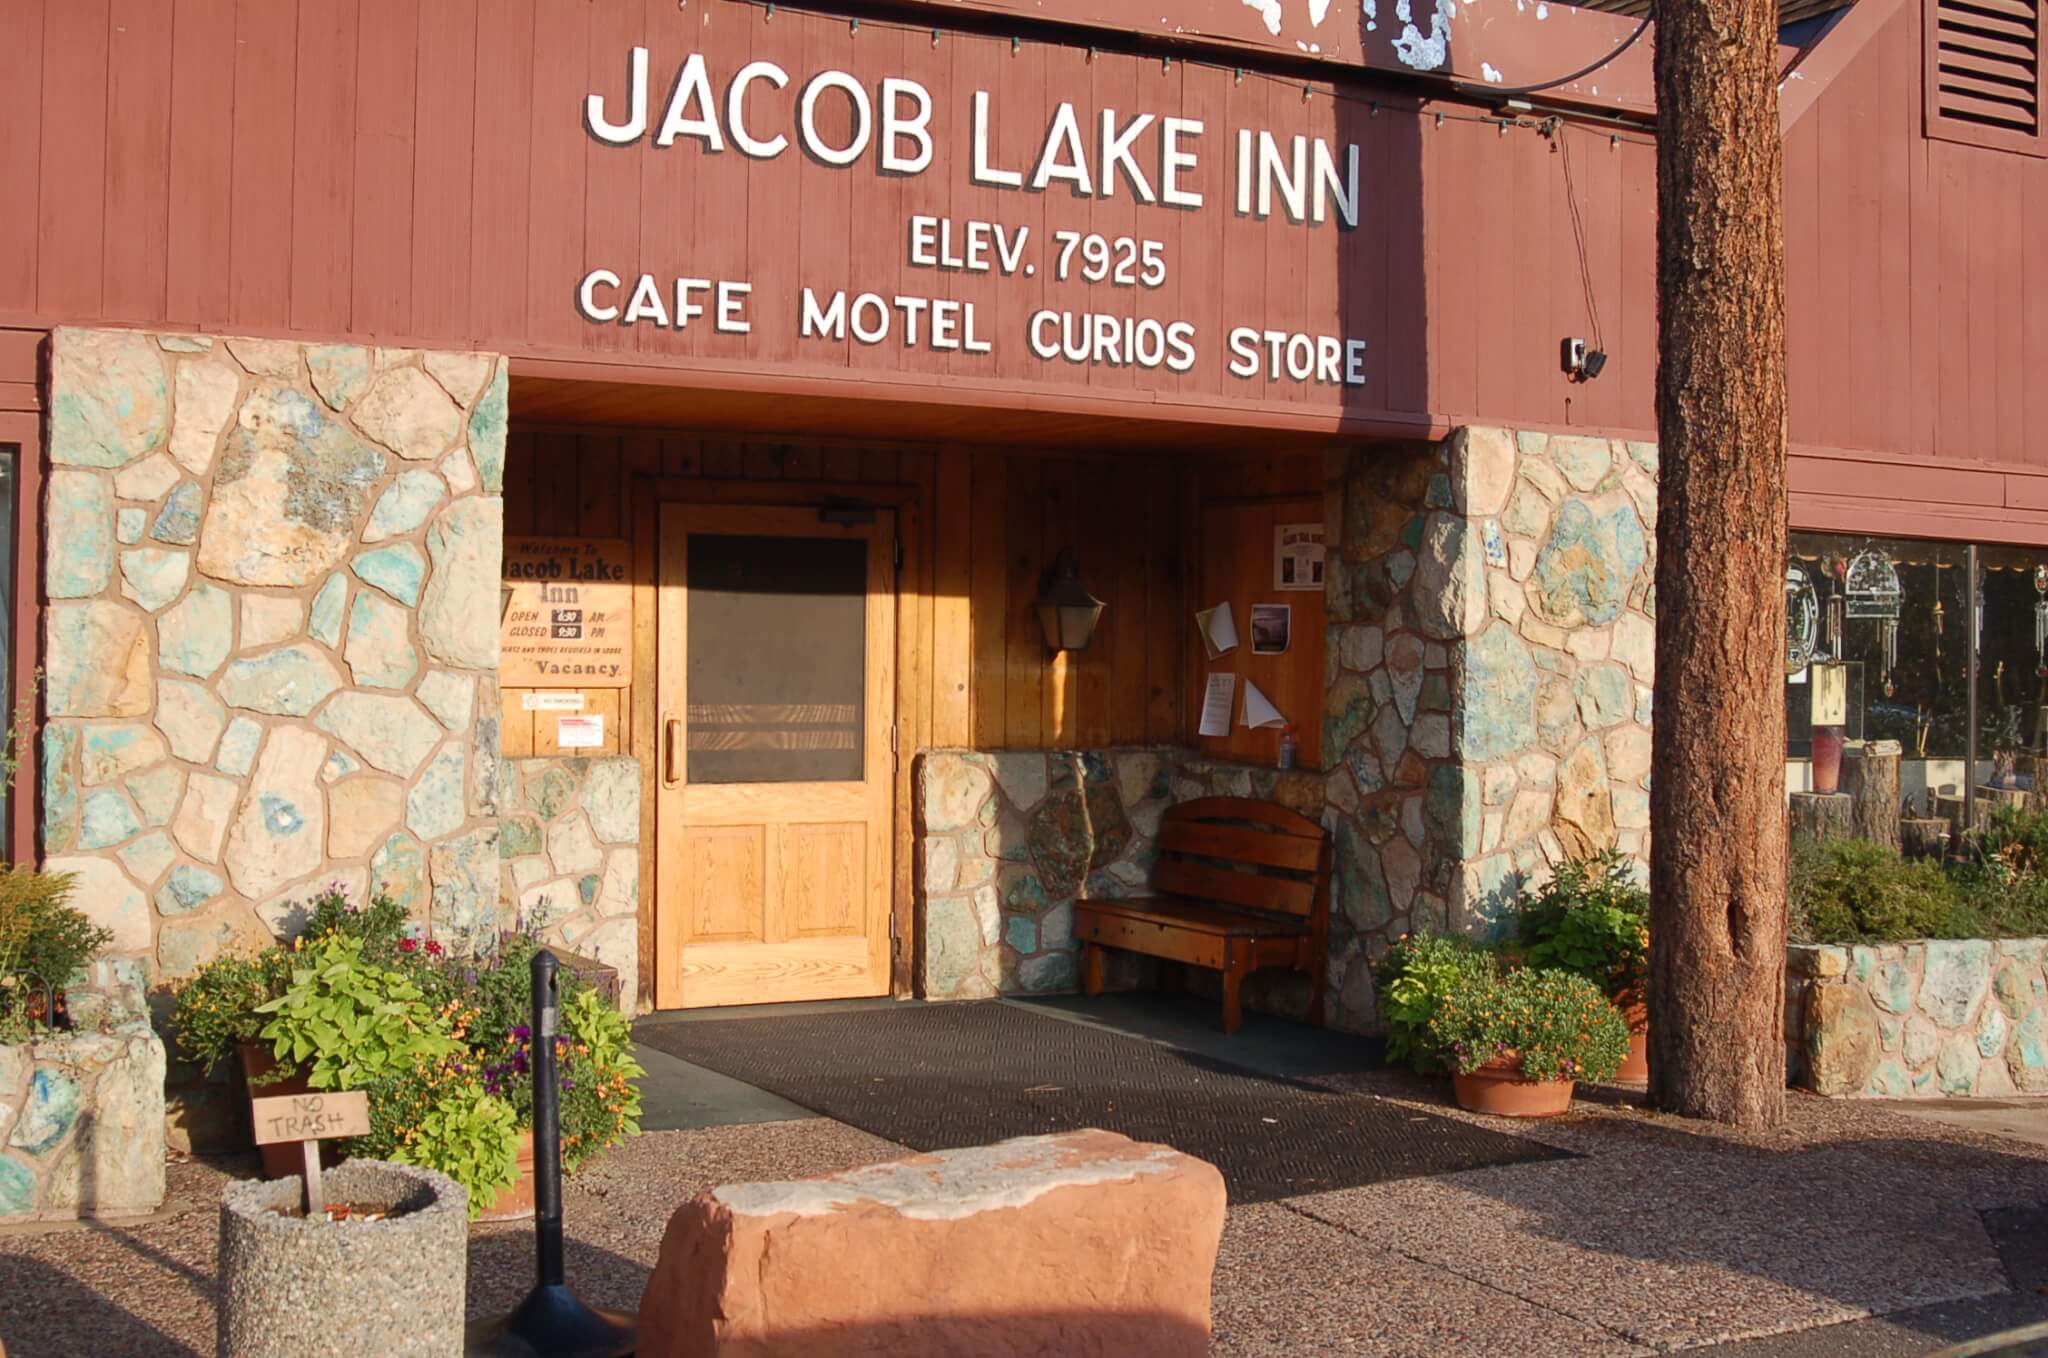 Grand Canyon National Park Area Campgrounds-Jacob_Lake_Inn